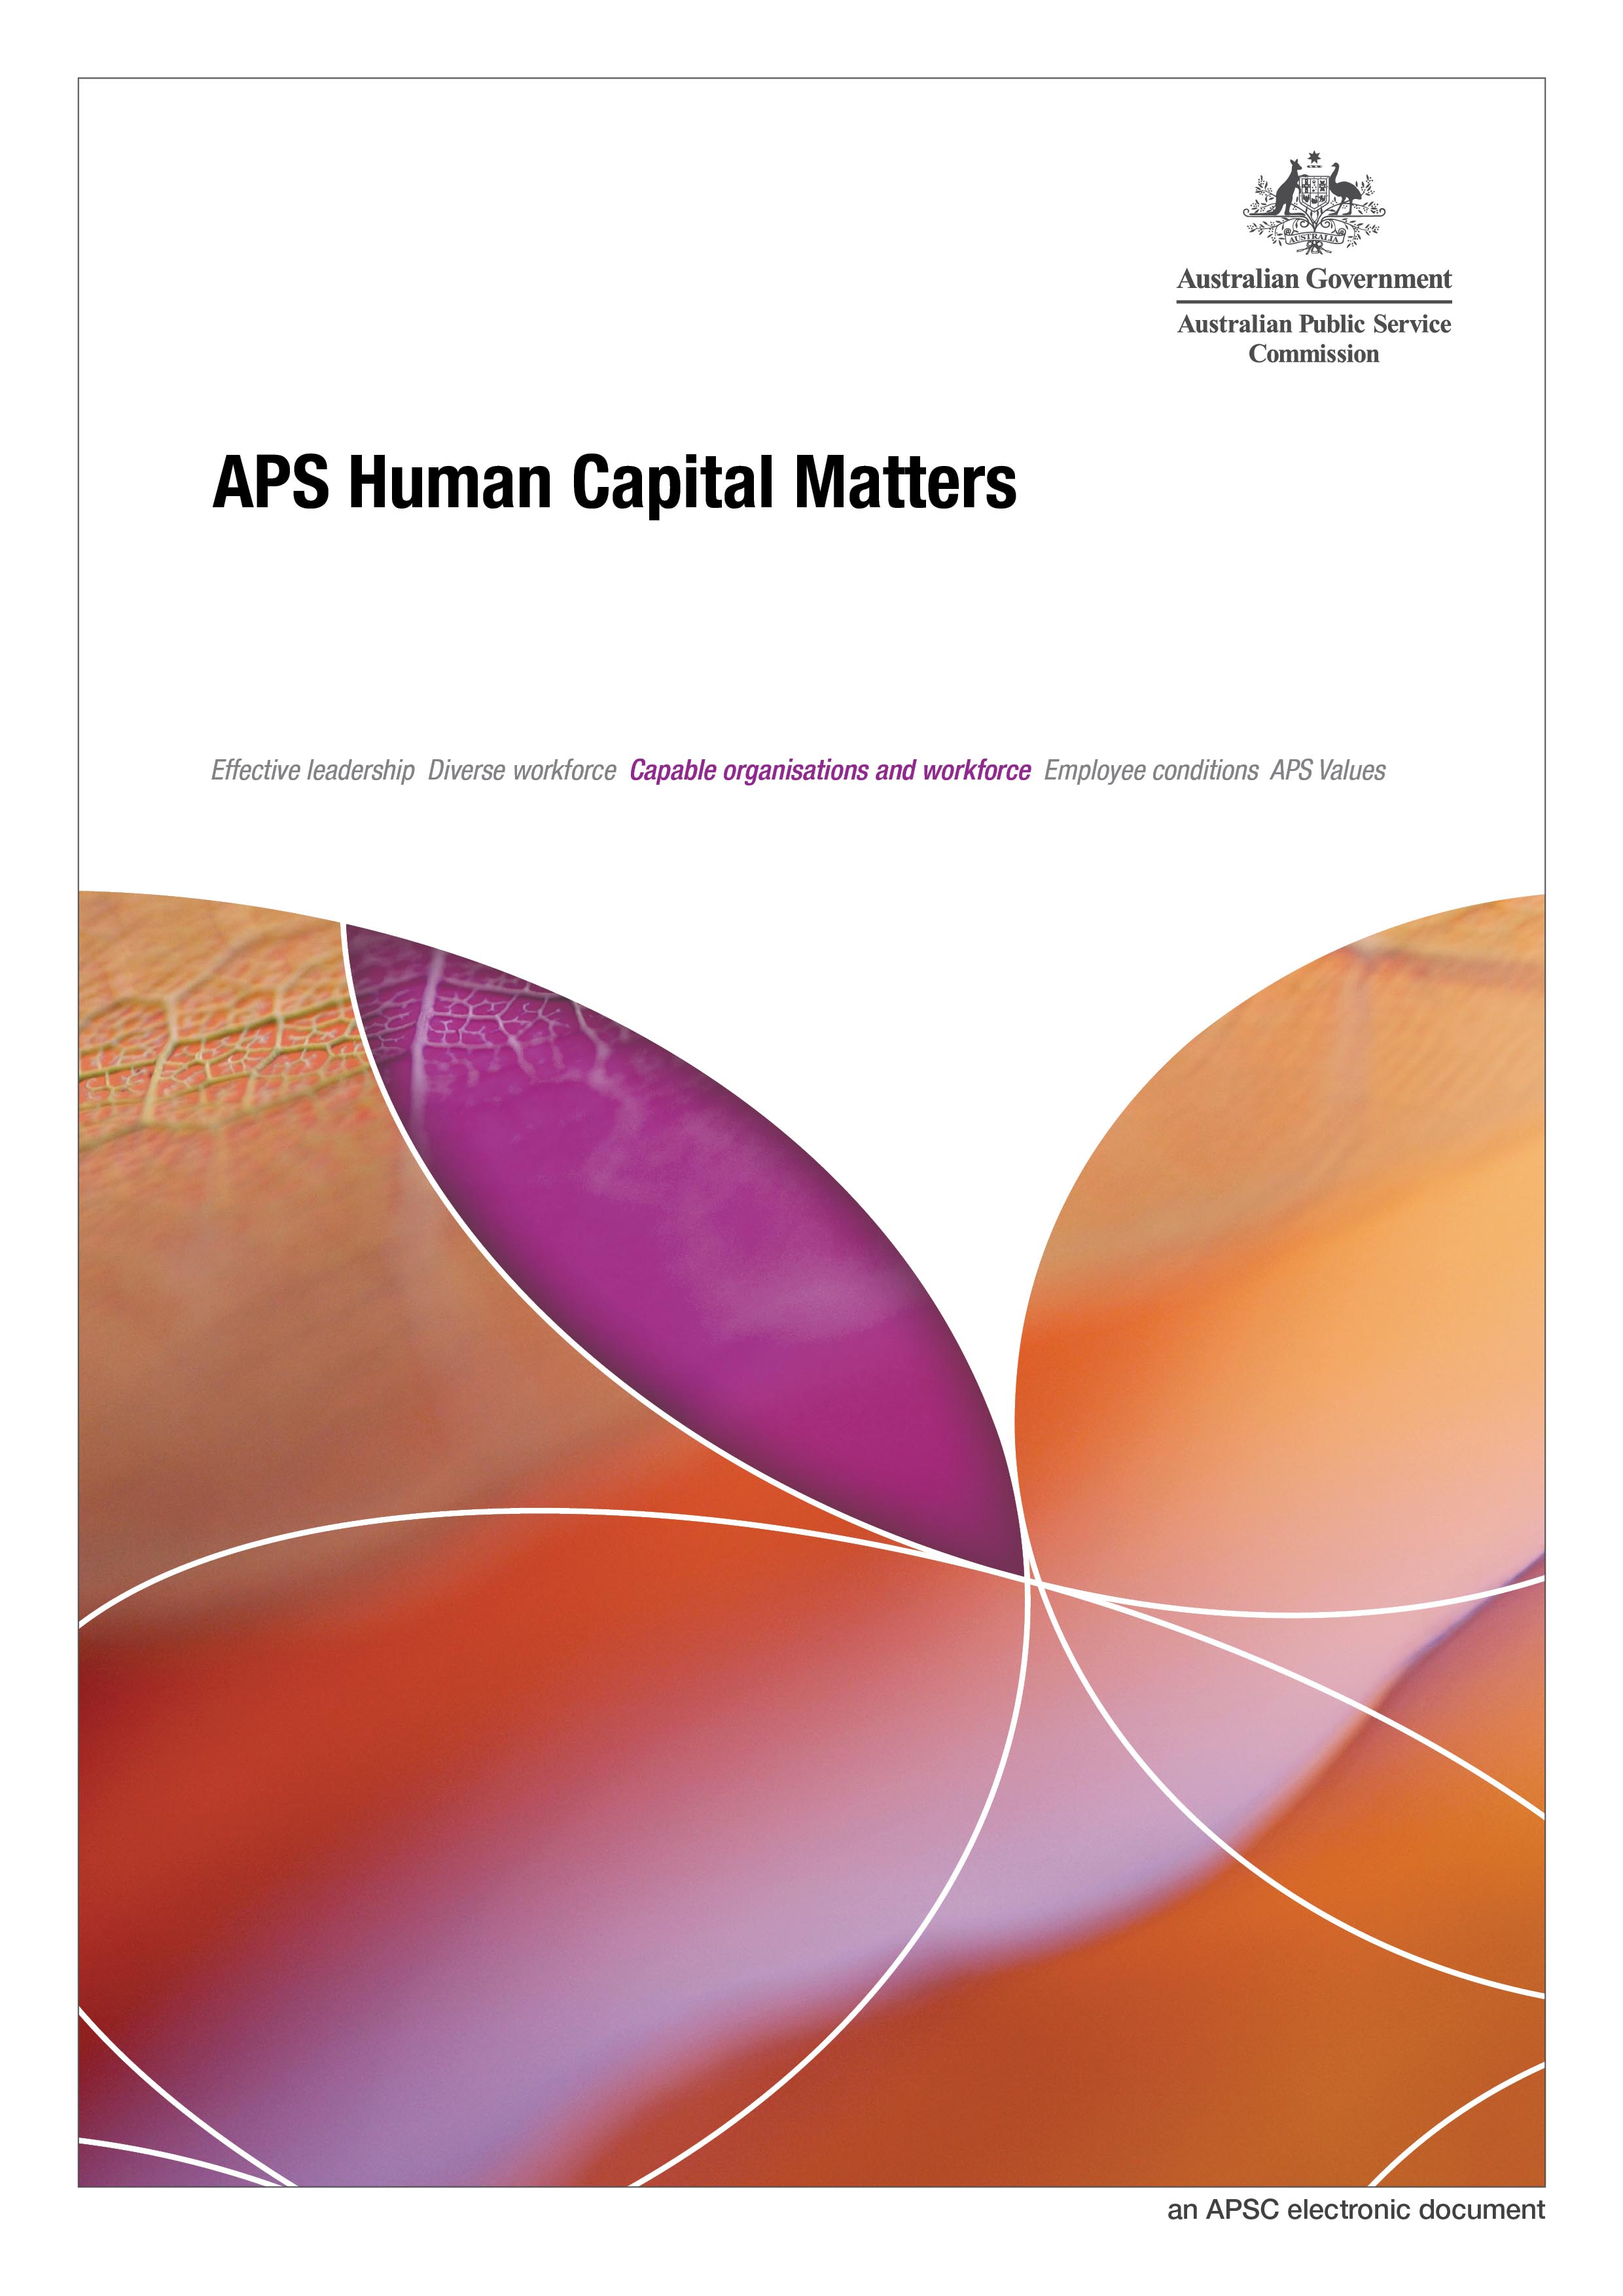 human capital matters cover